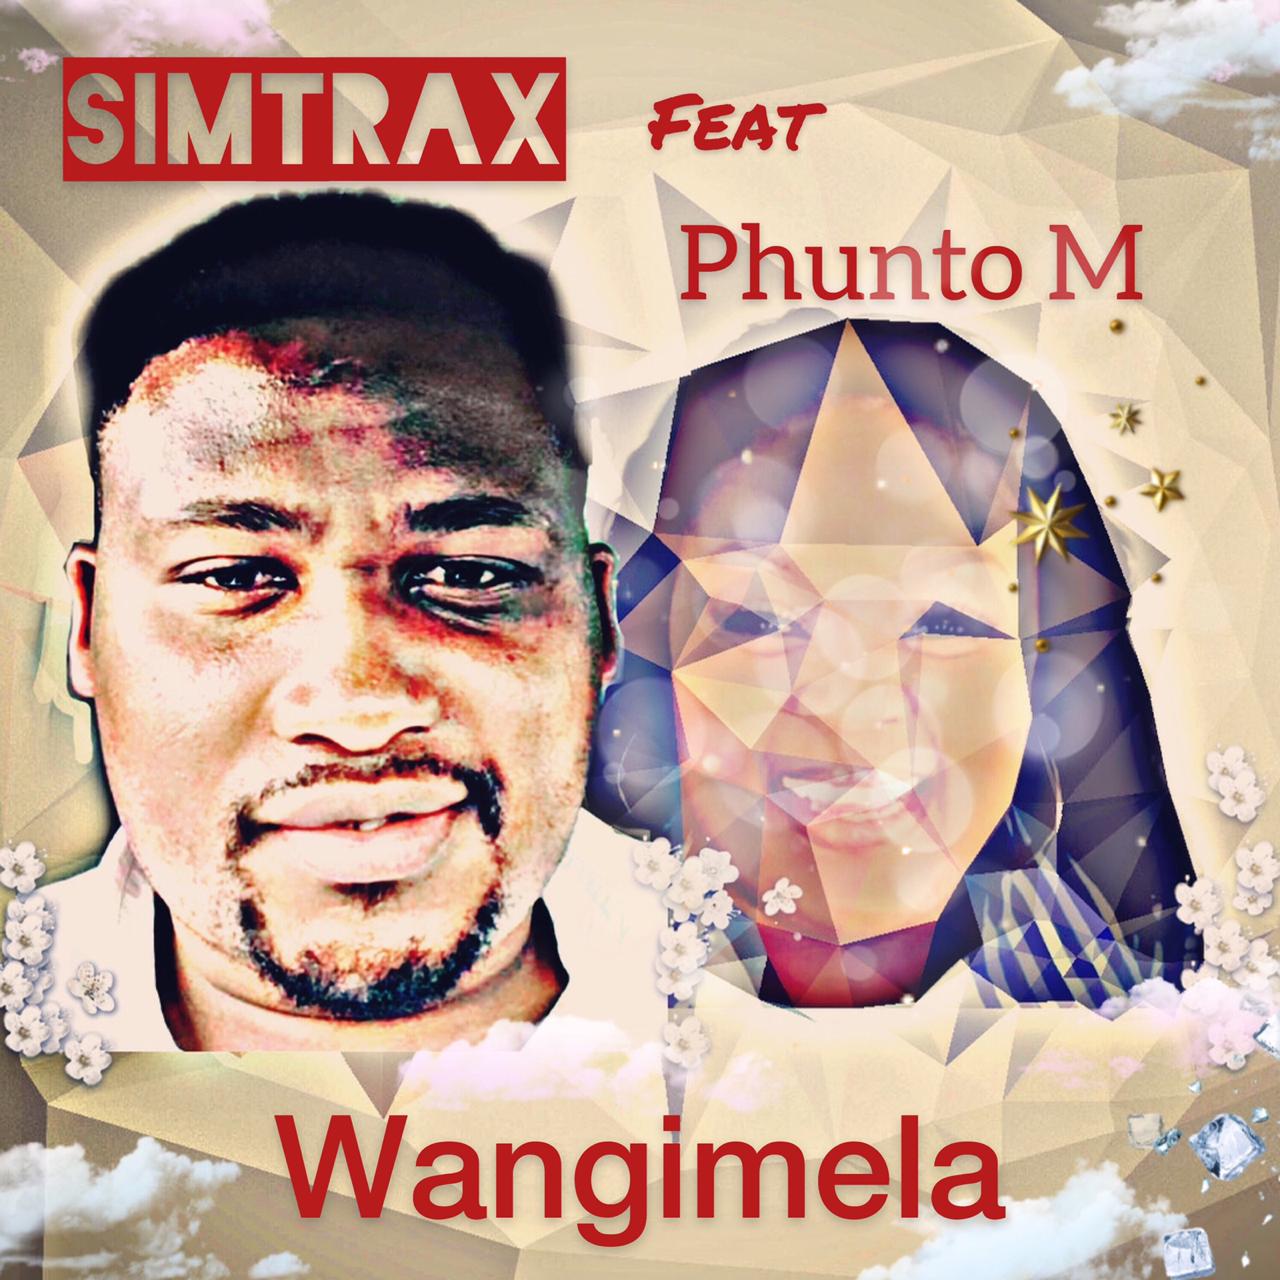 Simtrax Feat Phuto M